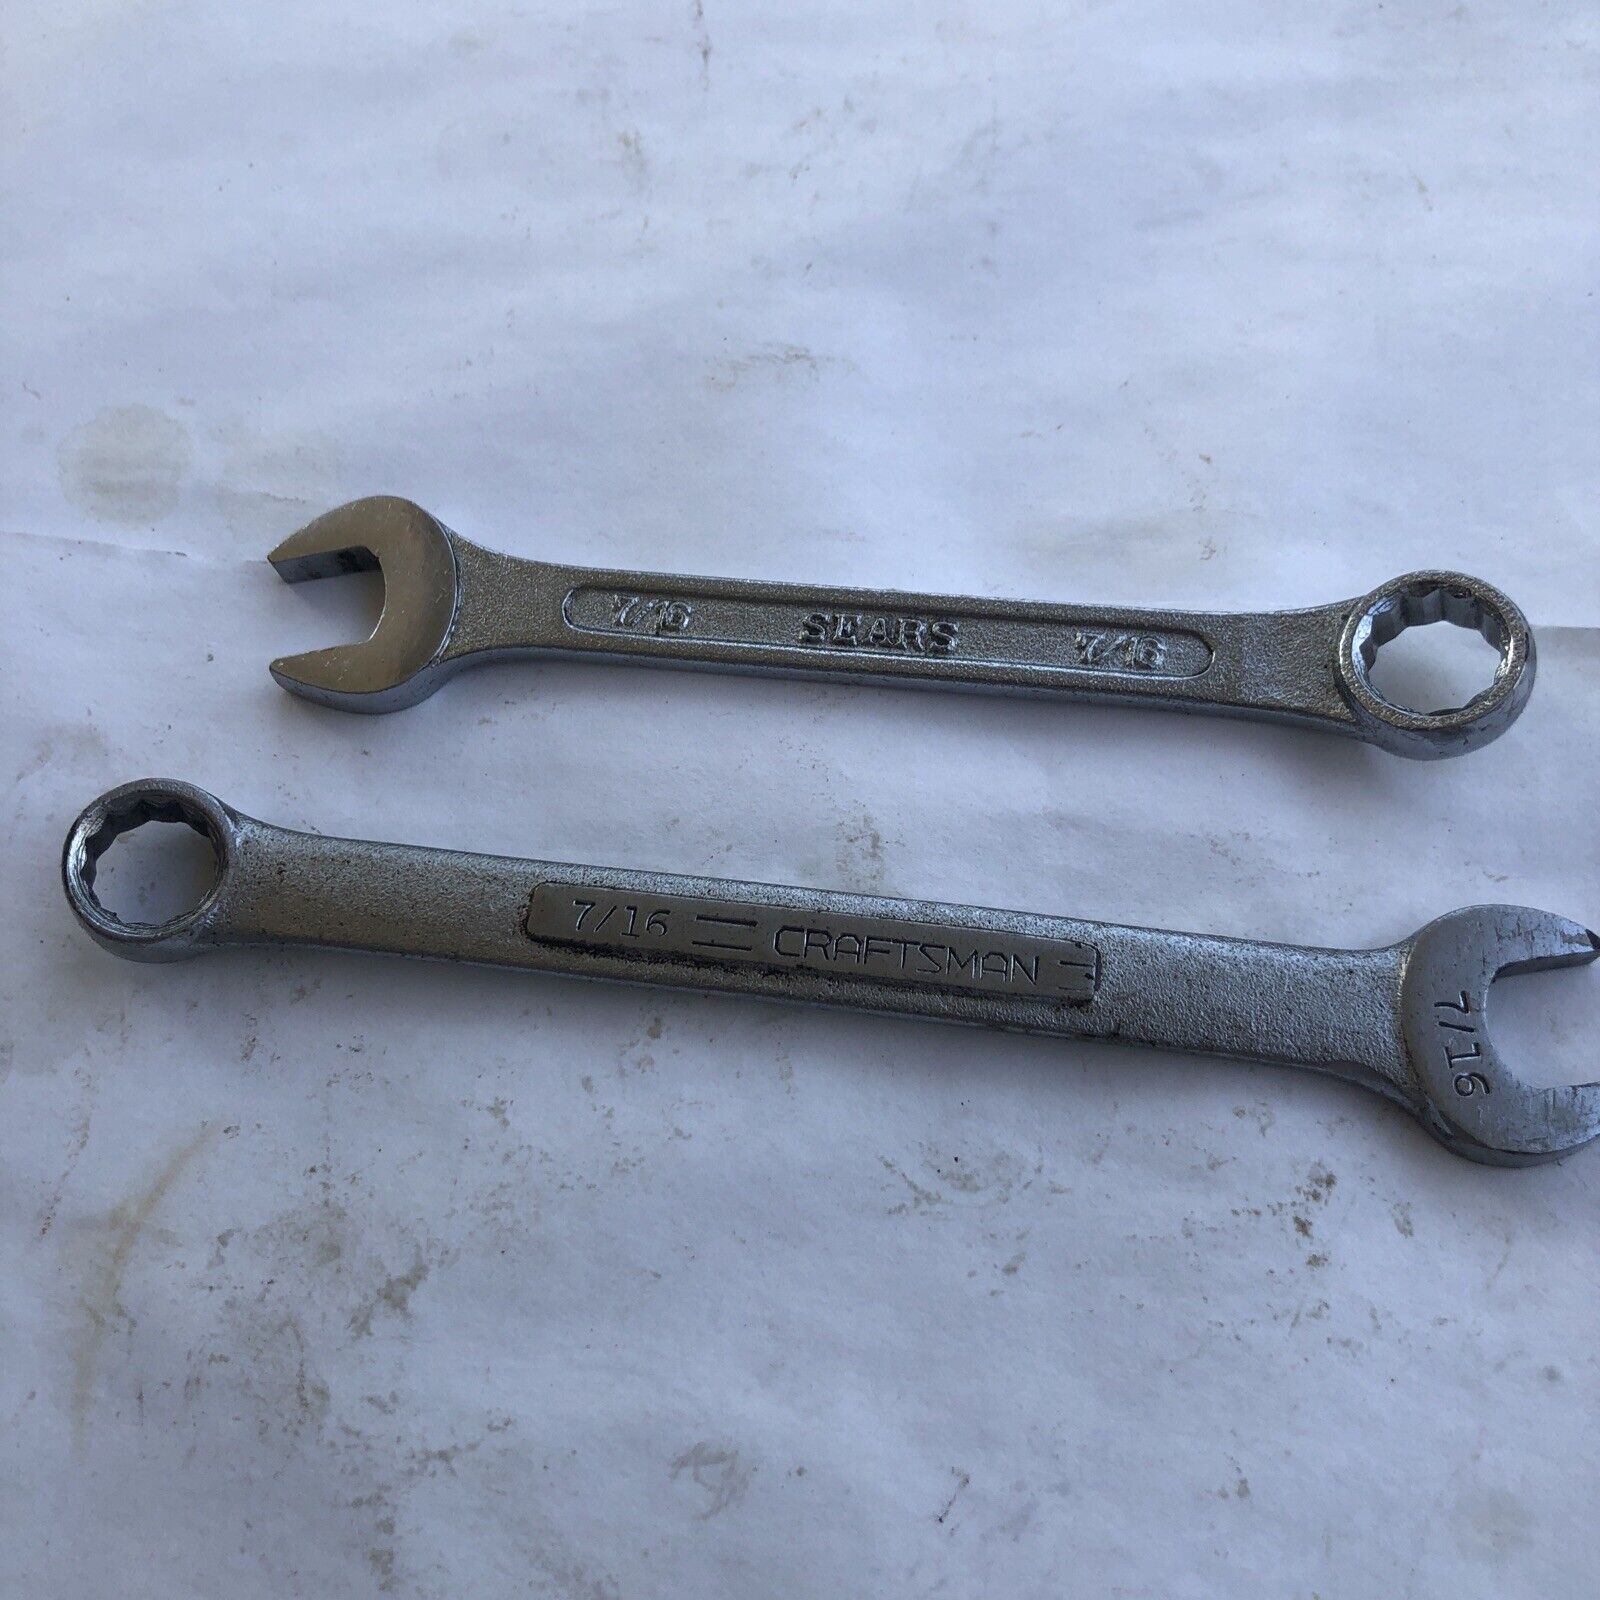 2-Vintage Craftsman 7/16 Combination Wrench 9-44704 USA & 7/16 Sears BF Japan